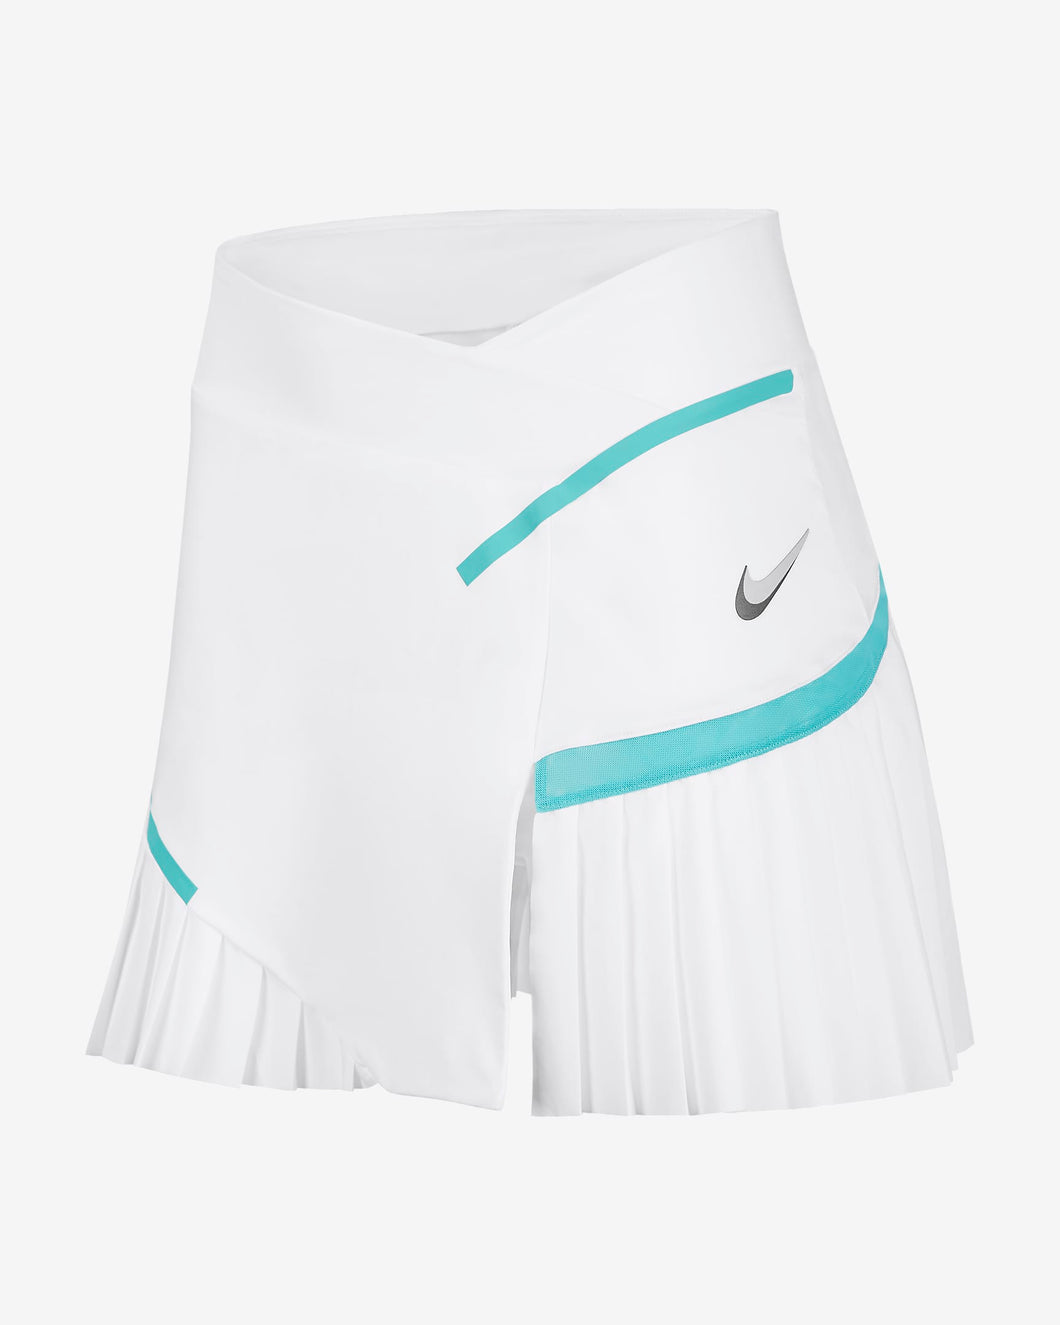 NikeCourt Dri-FIT Women's Tennis Skirt - NEW ARRIVAL